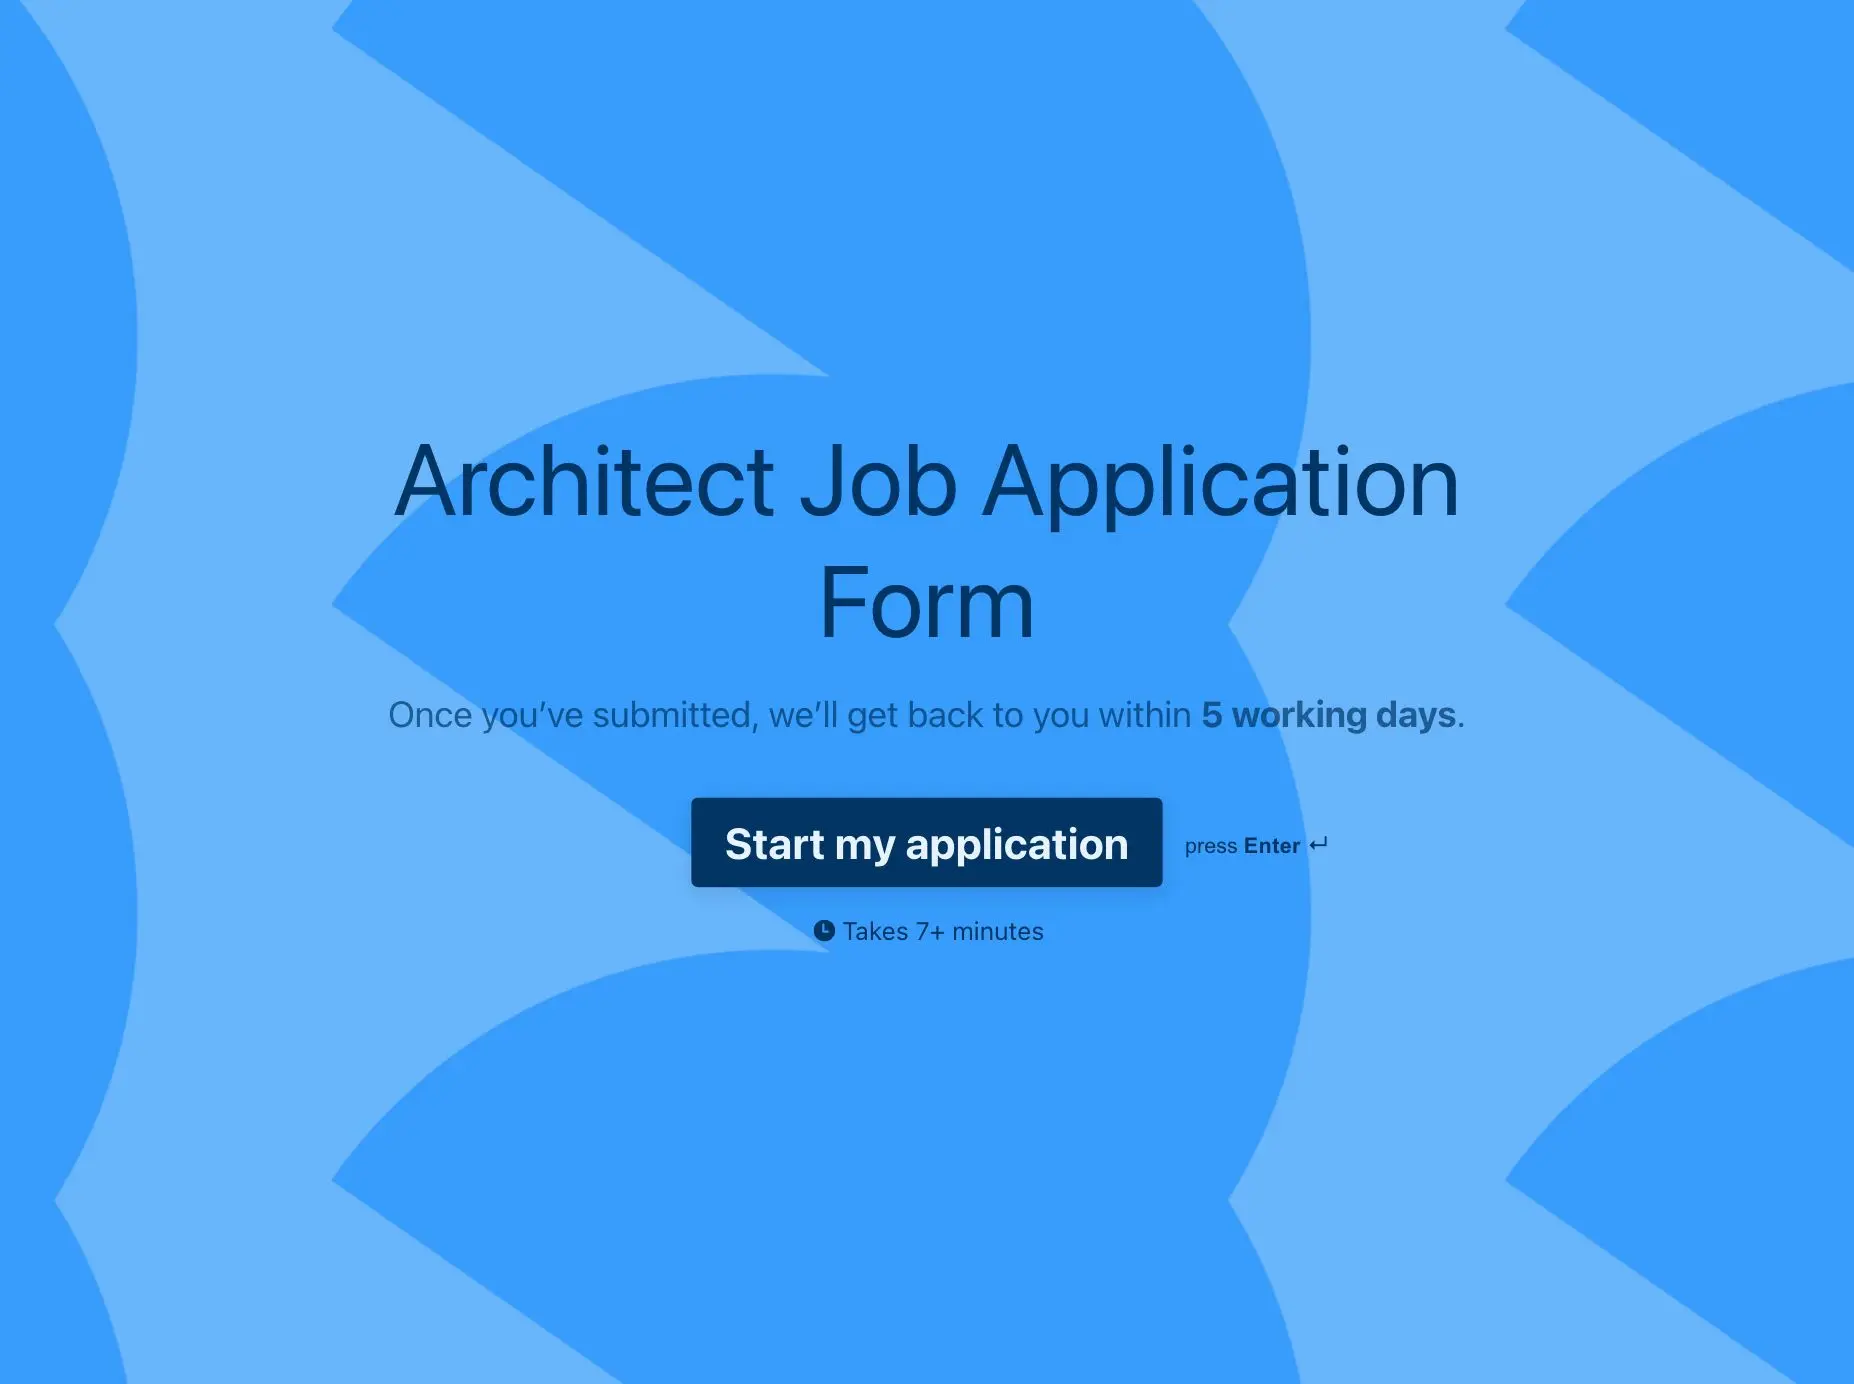 Architect Job Application Form Template Hero